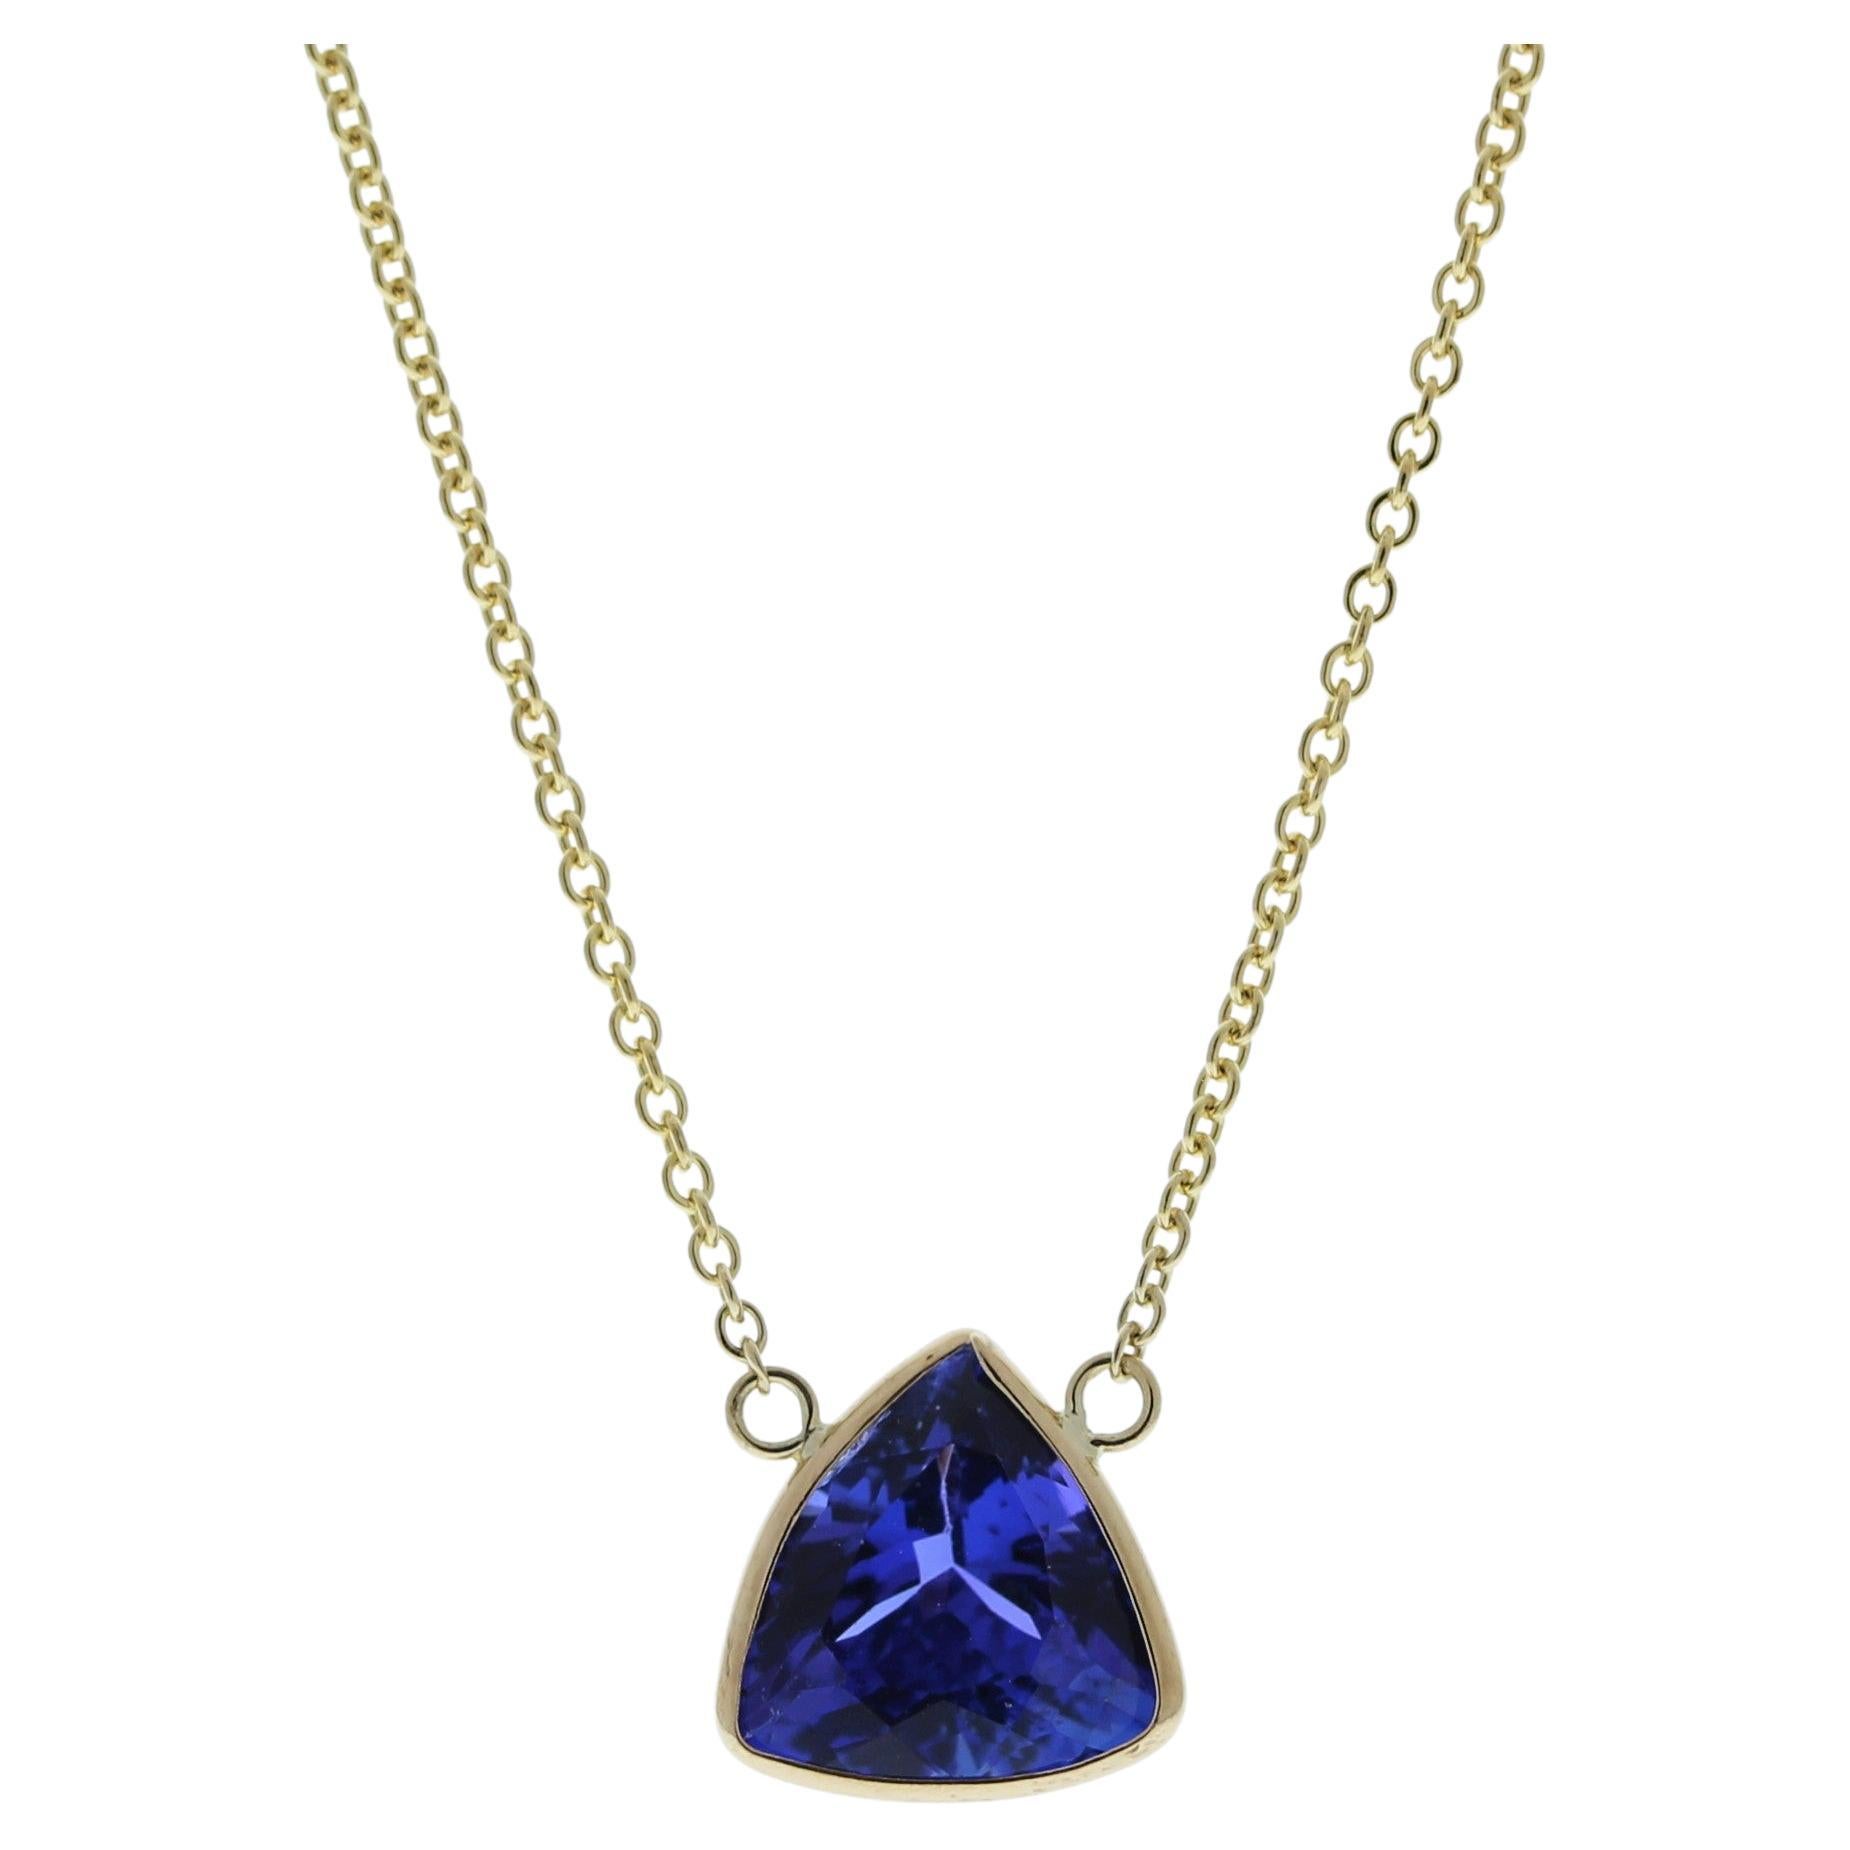 3.11 Carat Trilliant Tanzanite Blue Fashion Necklaces In 14k Yellow Gold For Sale